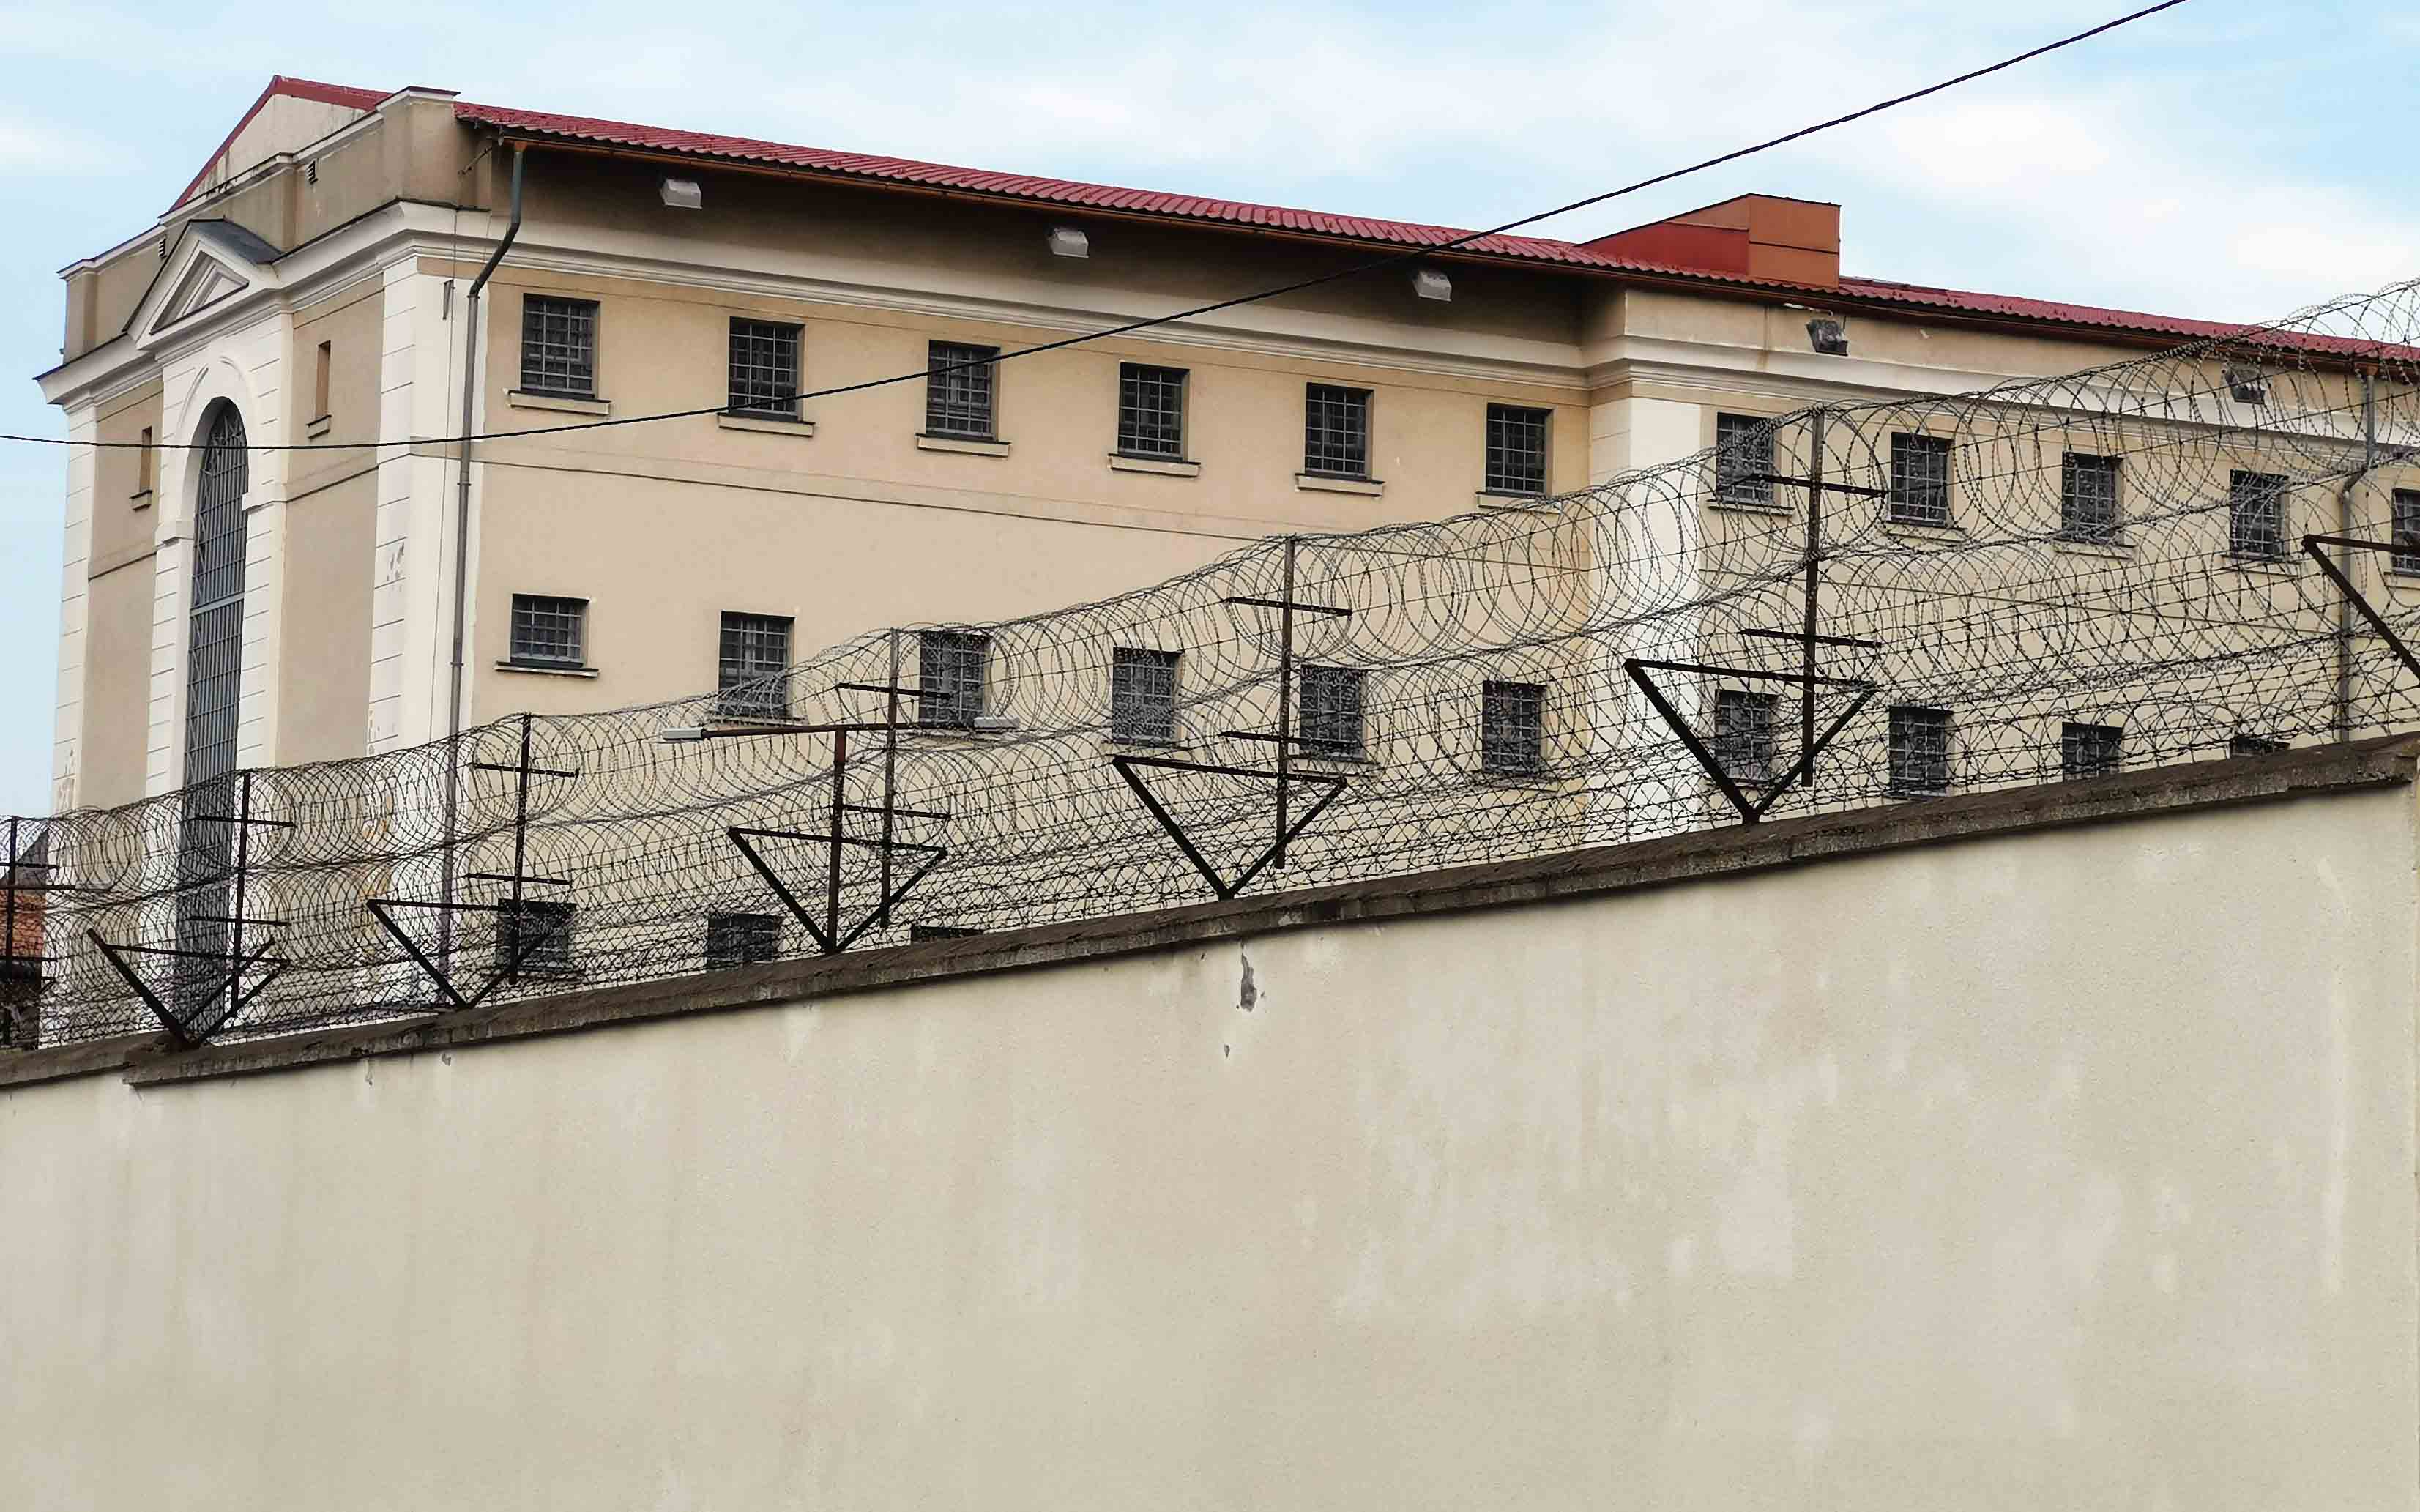 vězení maďarsko kató alpár dnh 2020